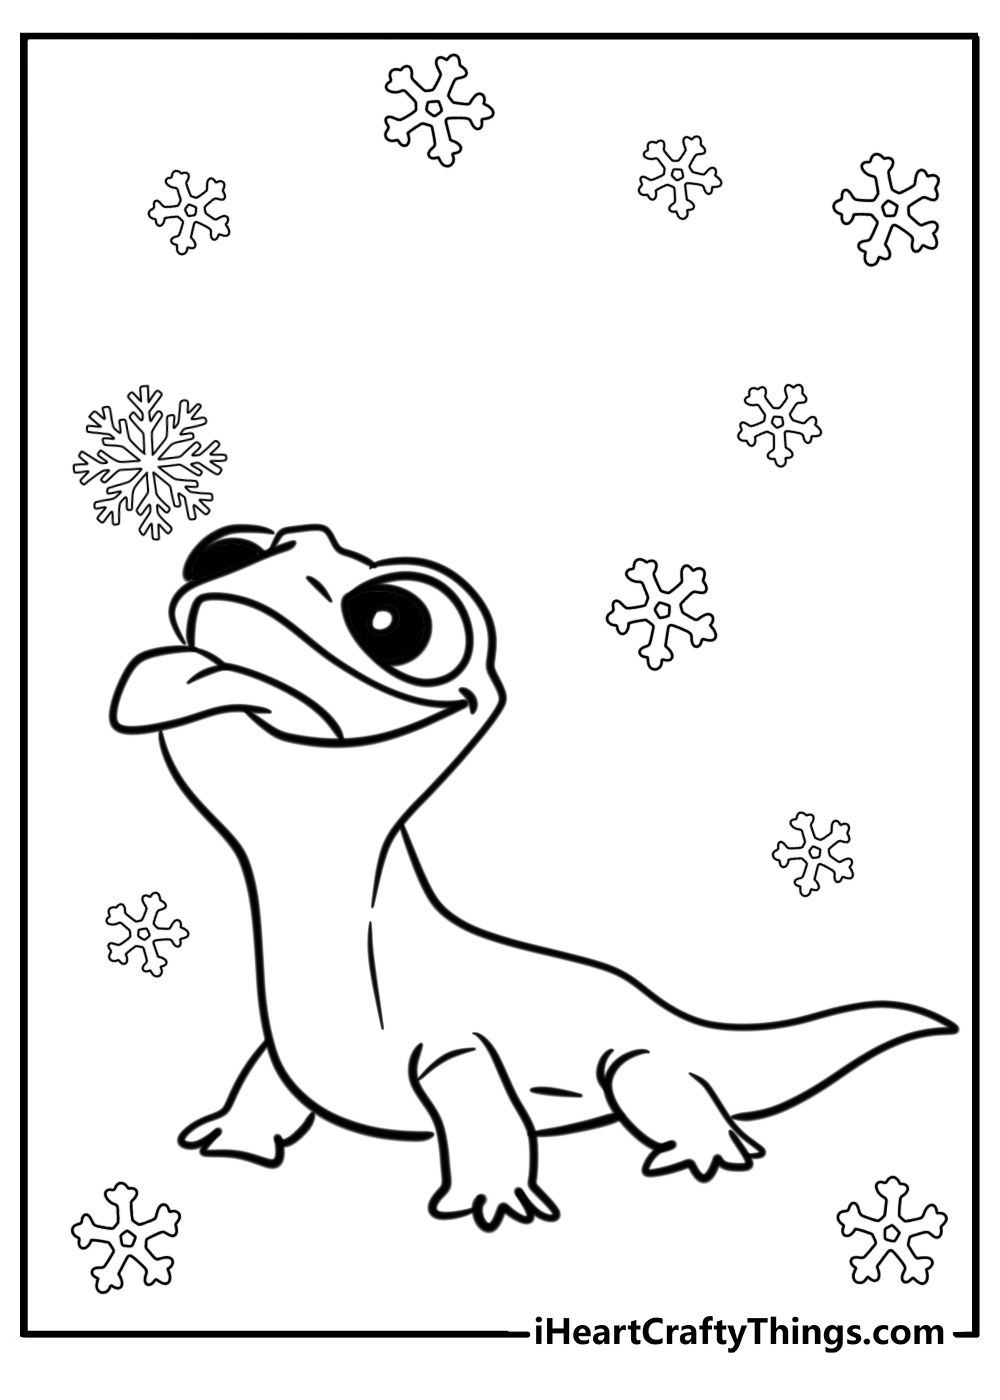 Frozen lizard coloring page